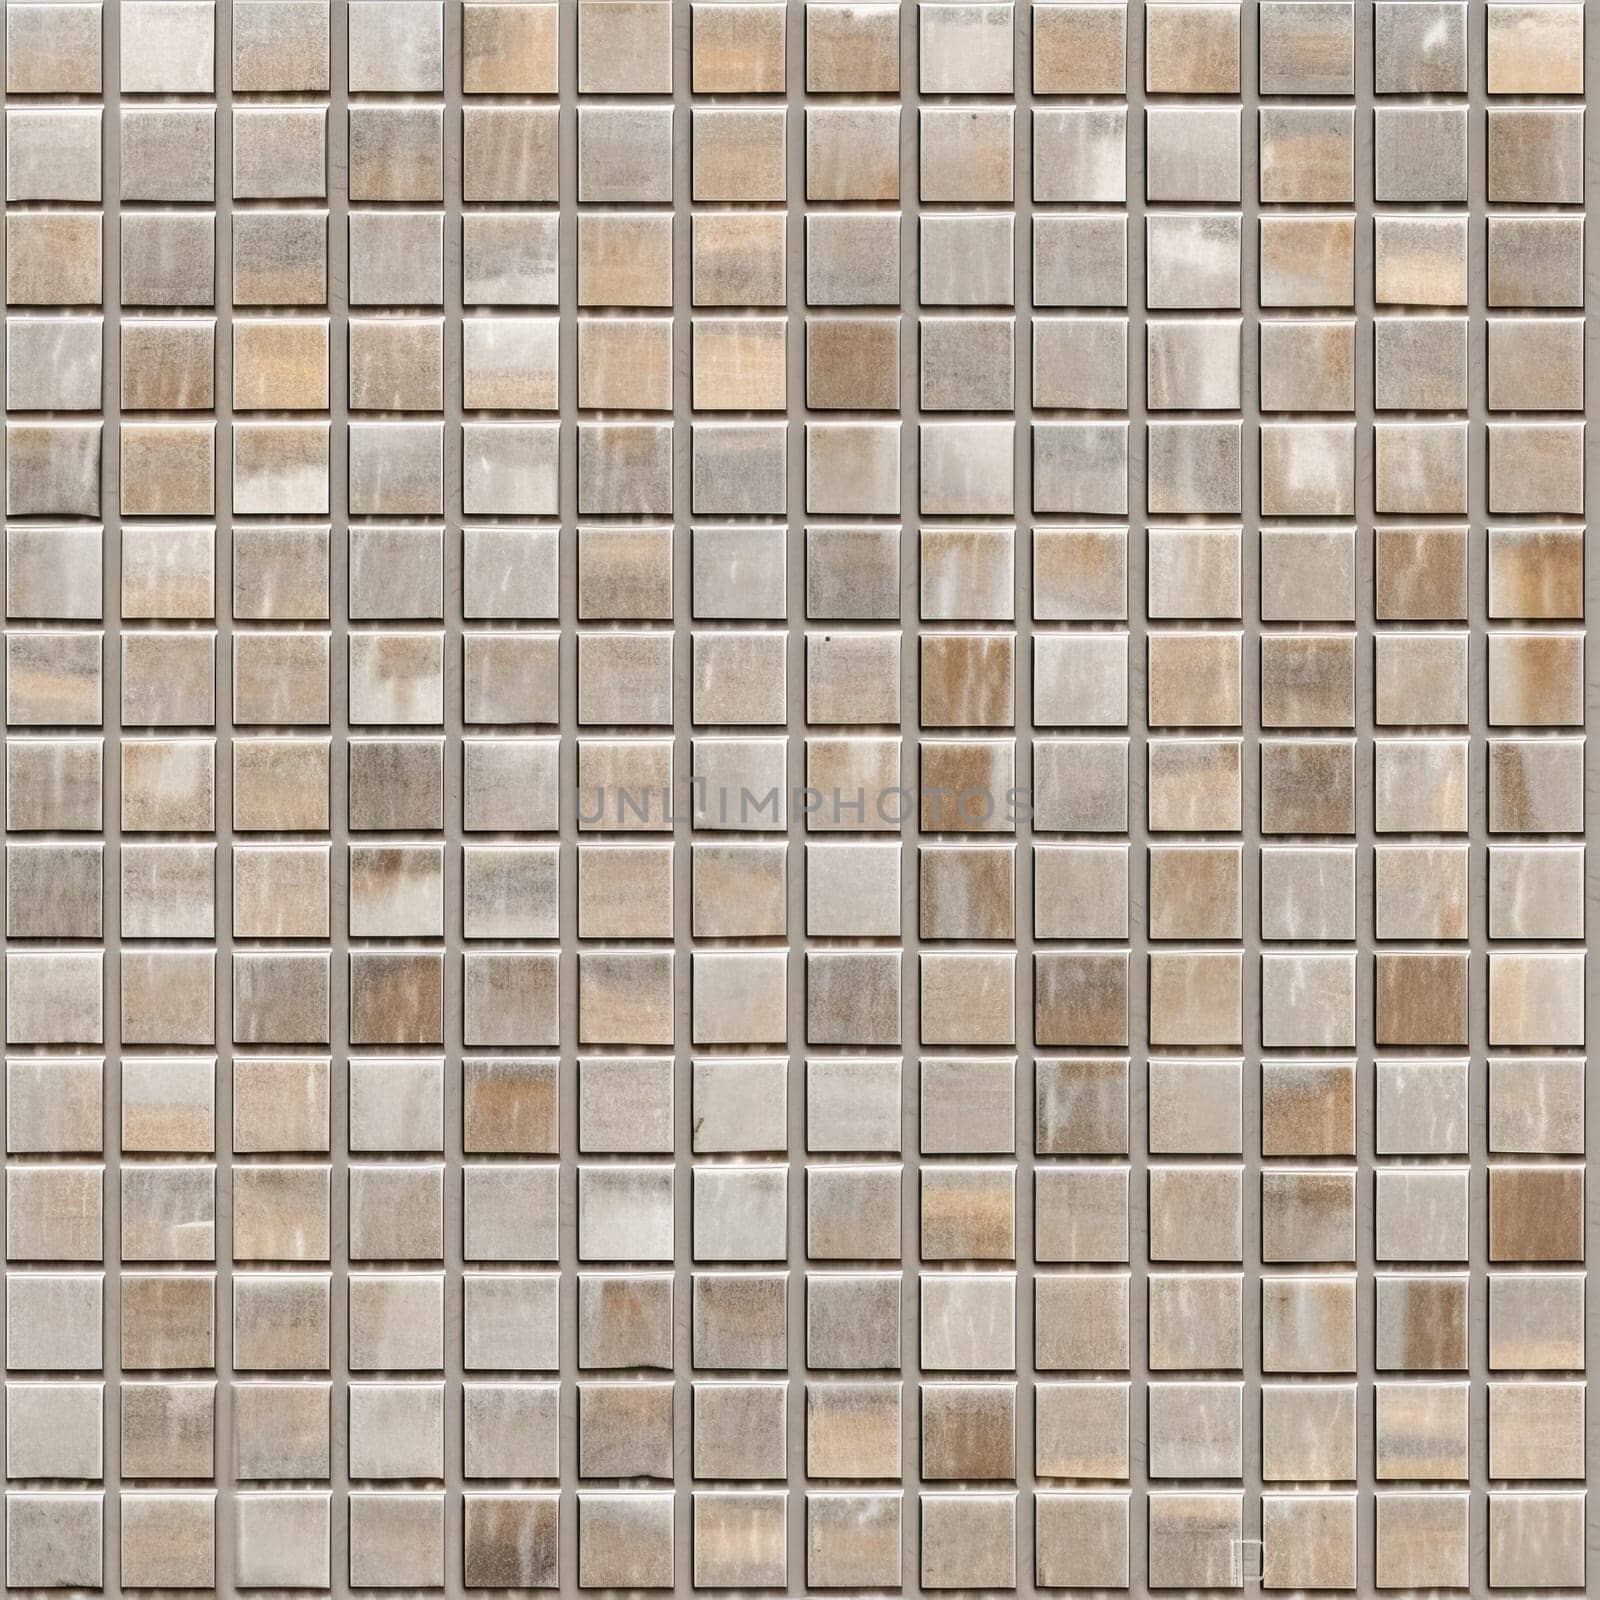 Stone wall pattern by ylivdesign